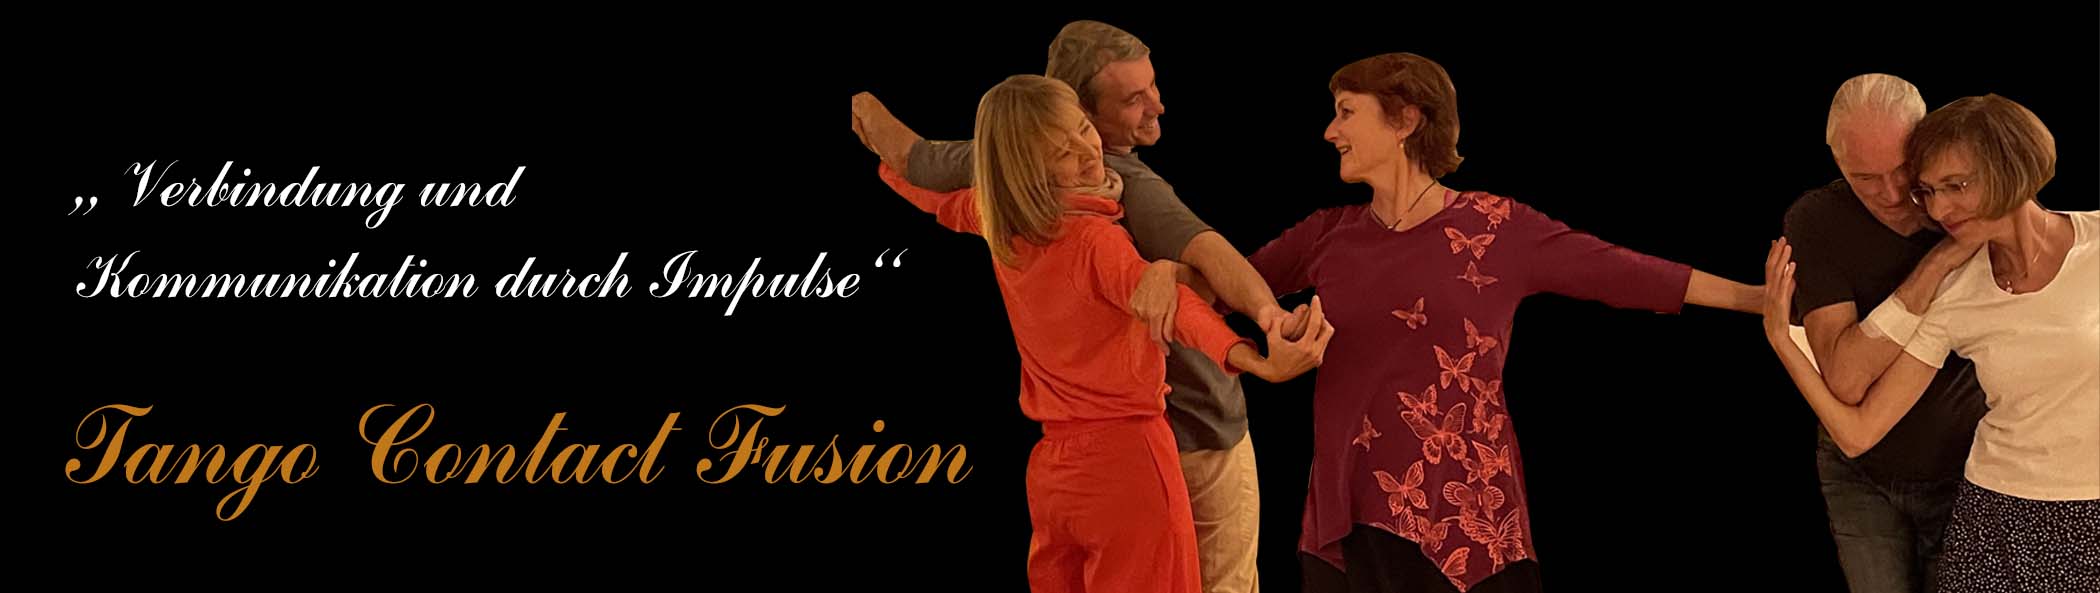 Tango Contact Fusion